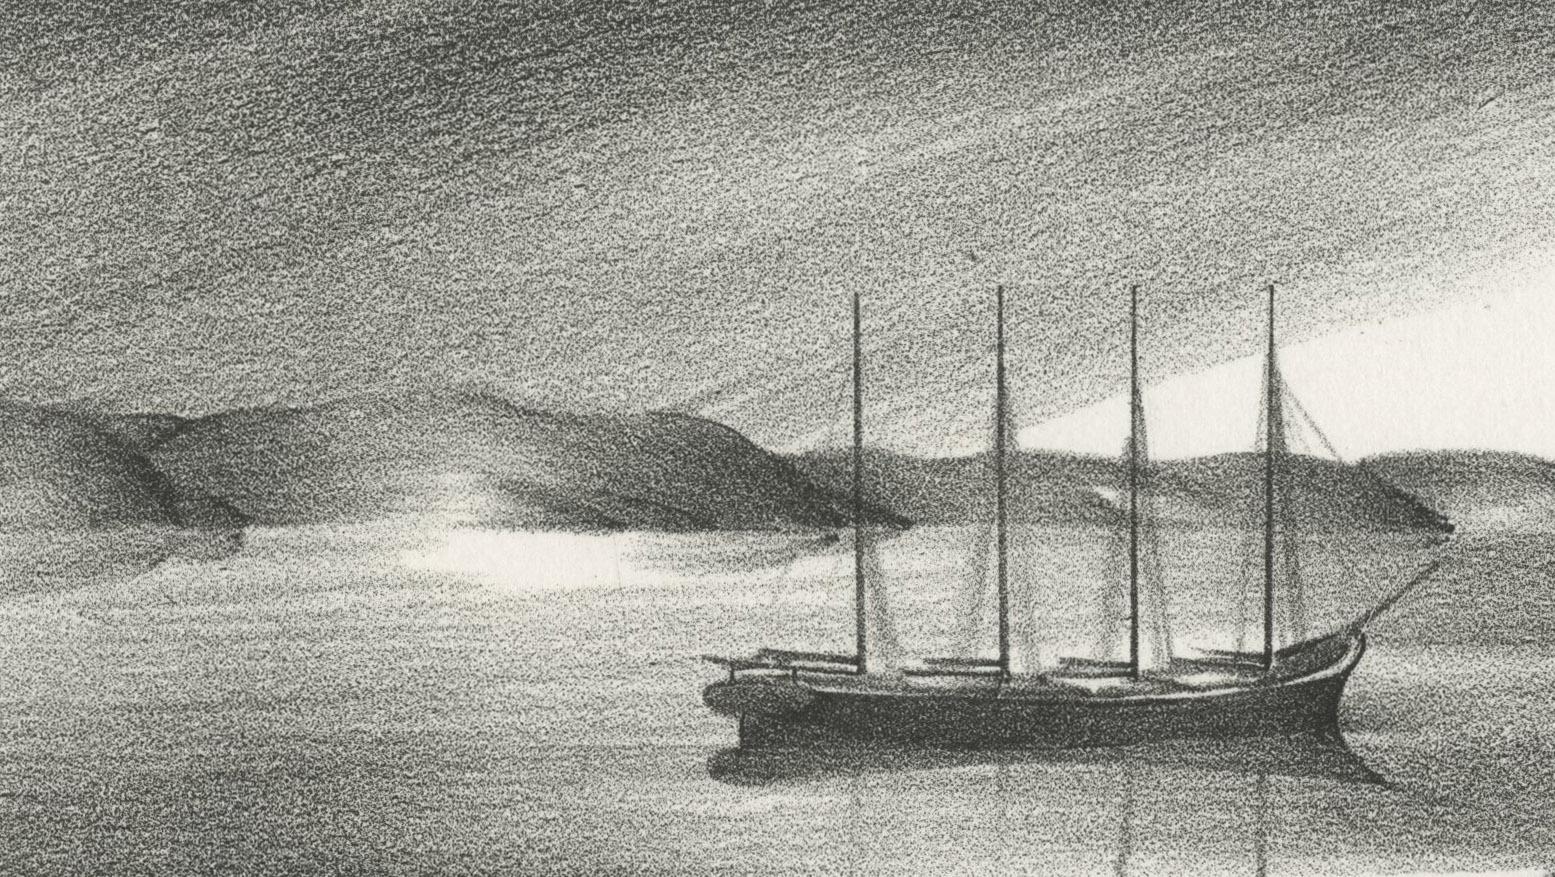 Sea's Strange Calm (Eastport, Maine) - Print by Stow Wengenroth